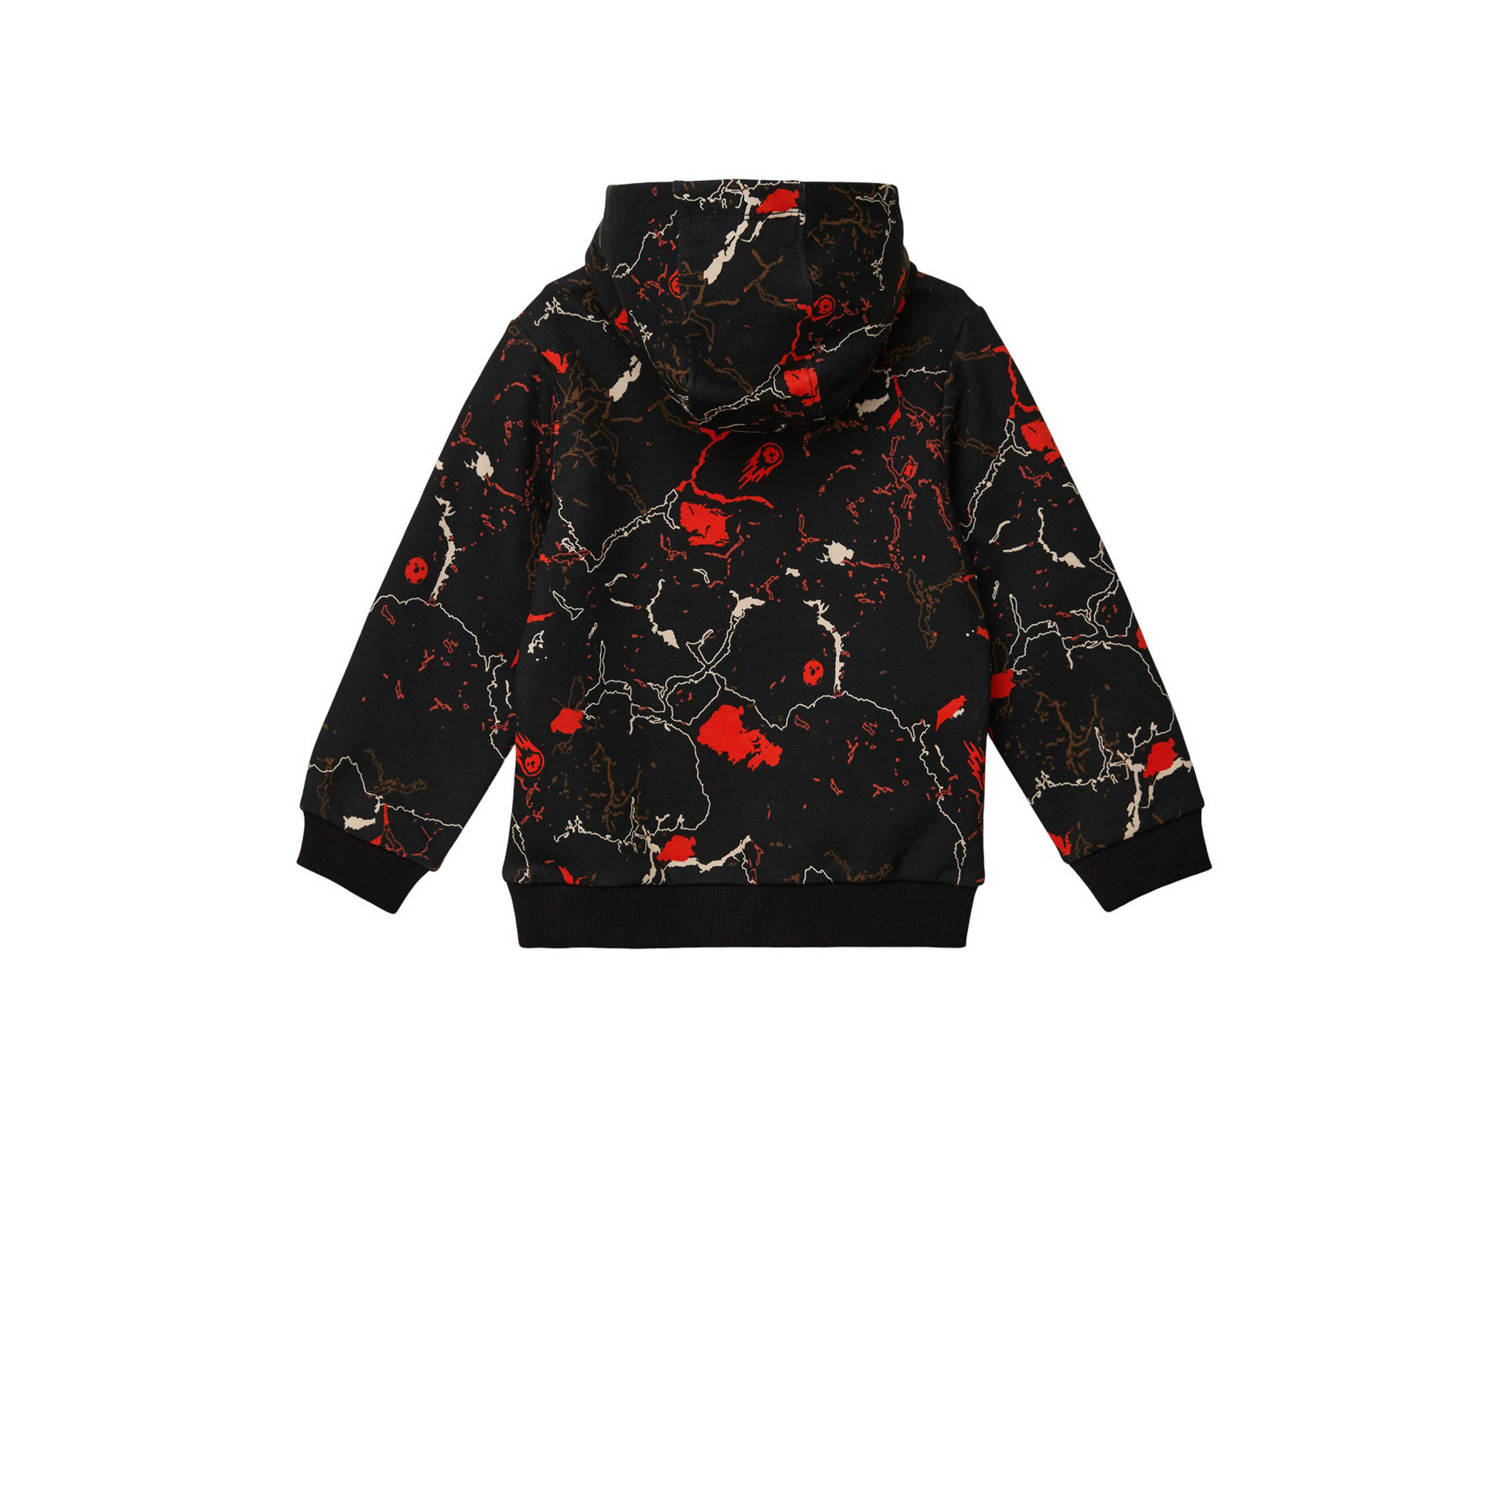 s.Oliver hoodie met all over print zwart rood